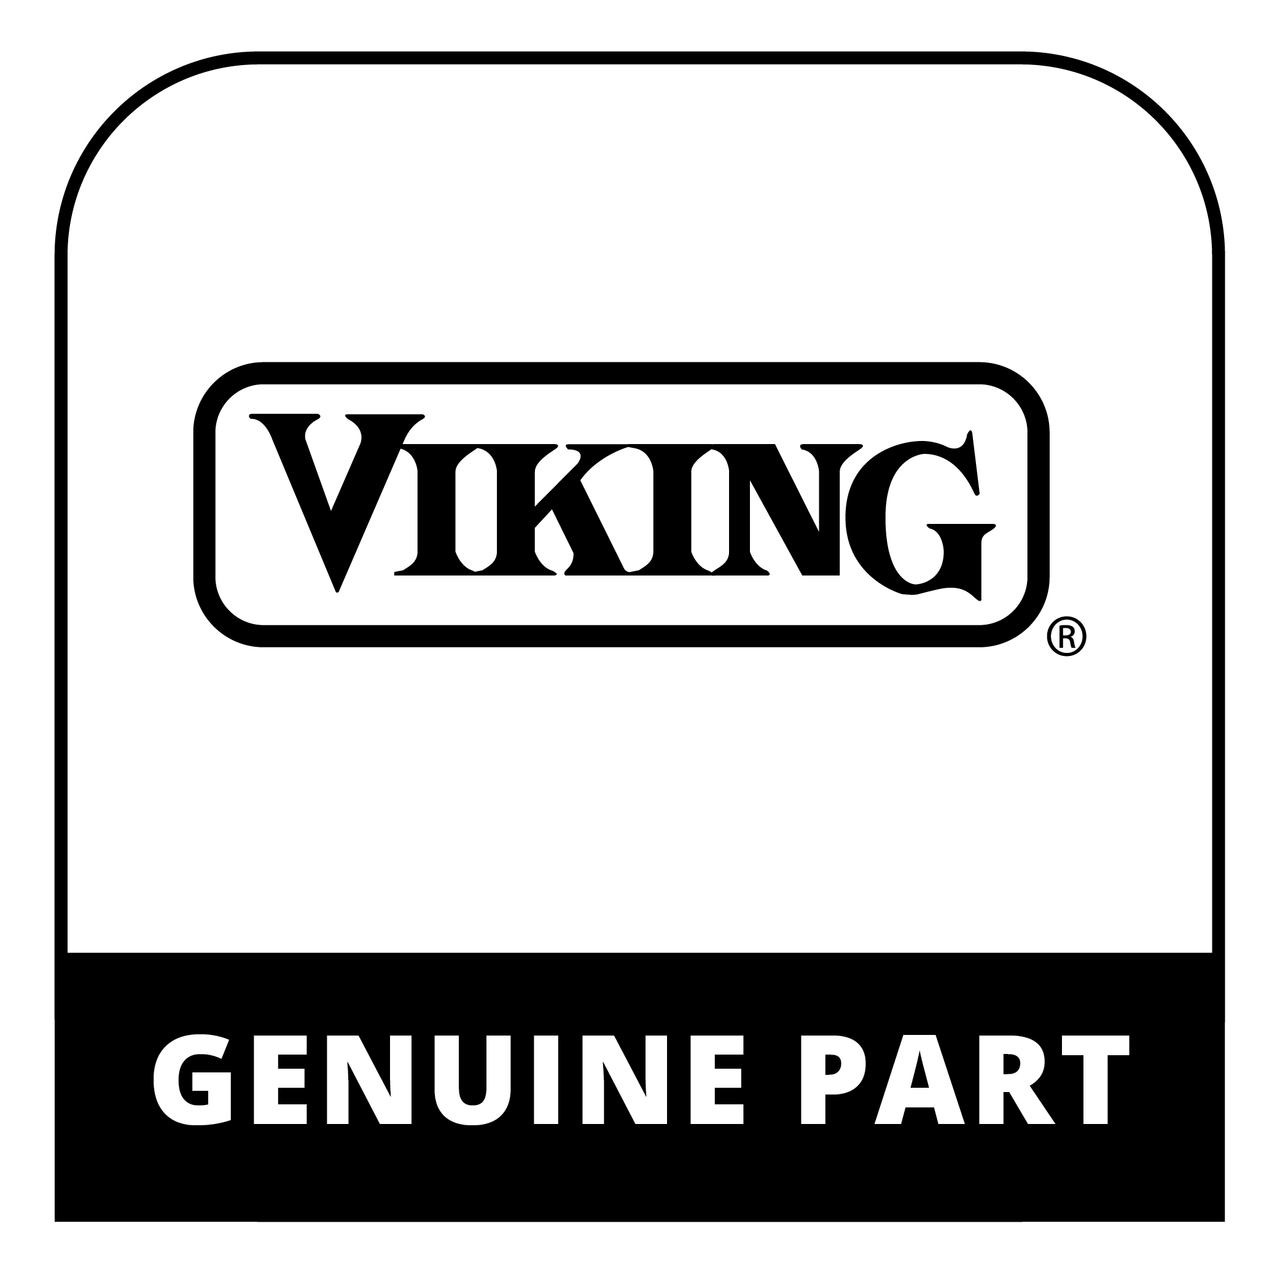 Viking 071613-000 - Gas Pipe 66 Viking - 2F+Ft+4F (806-185-00) - Genuine Viking Part